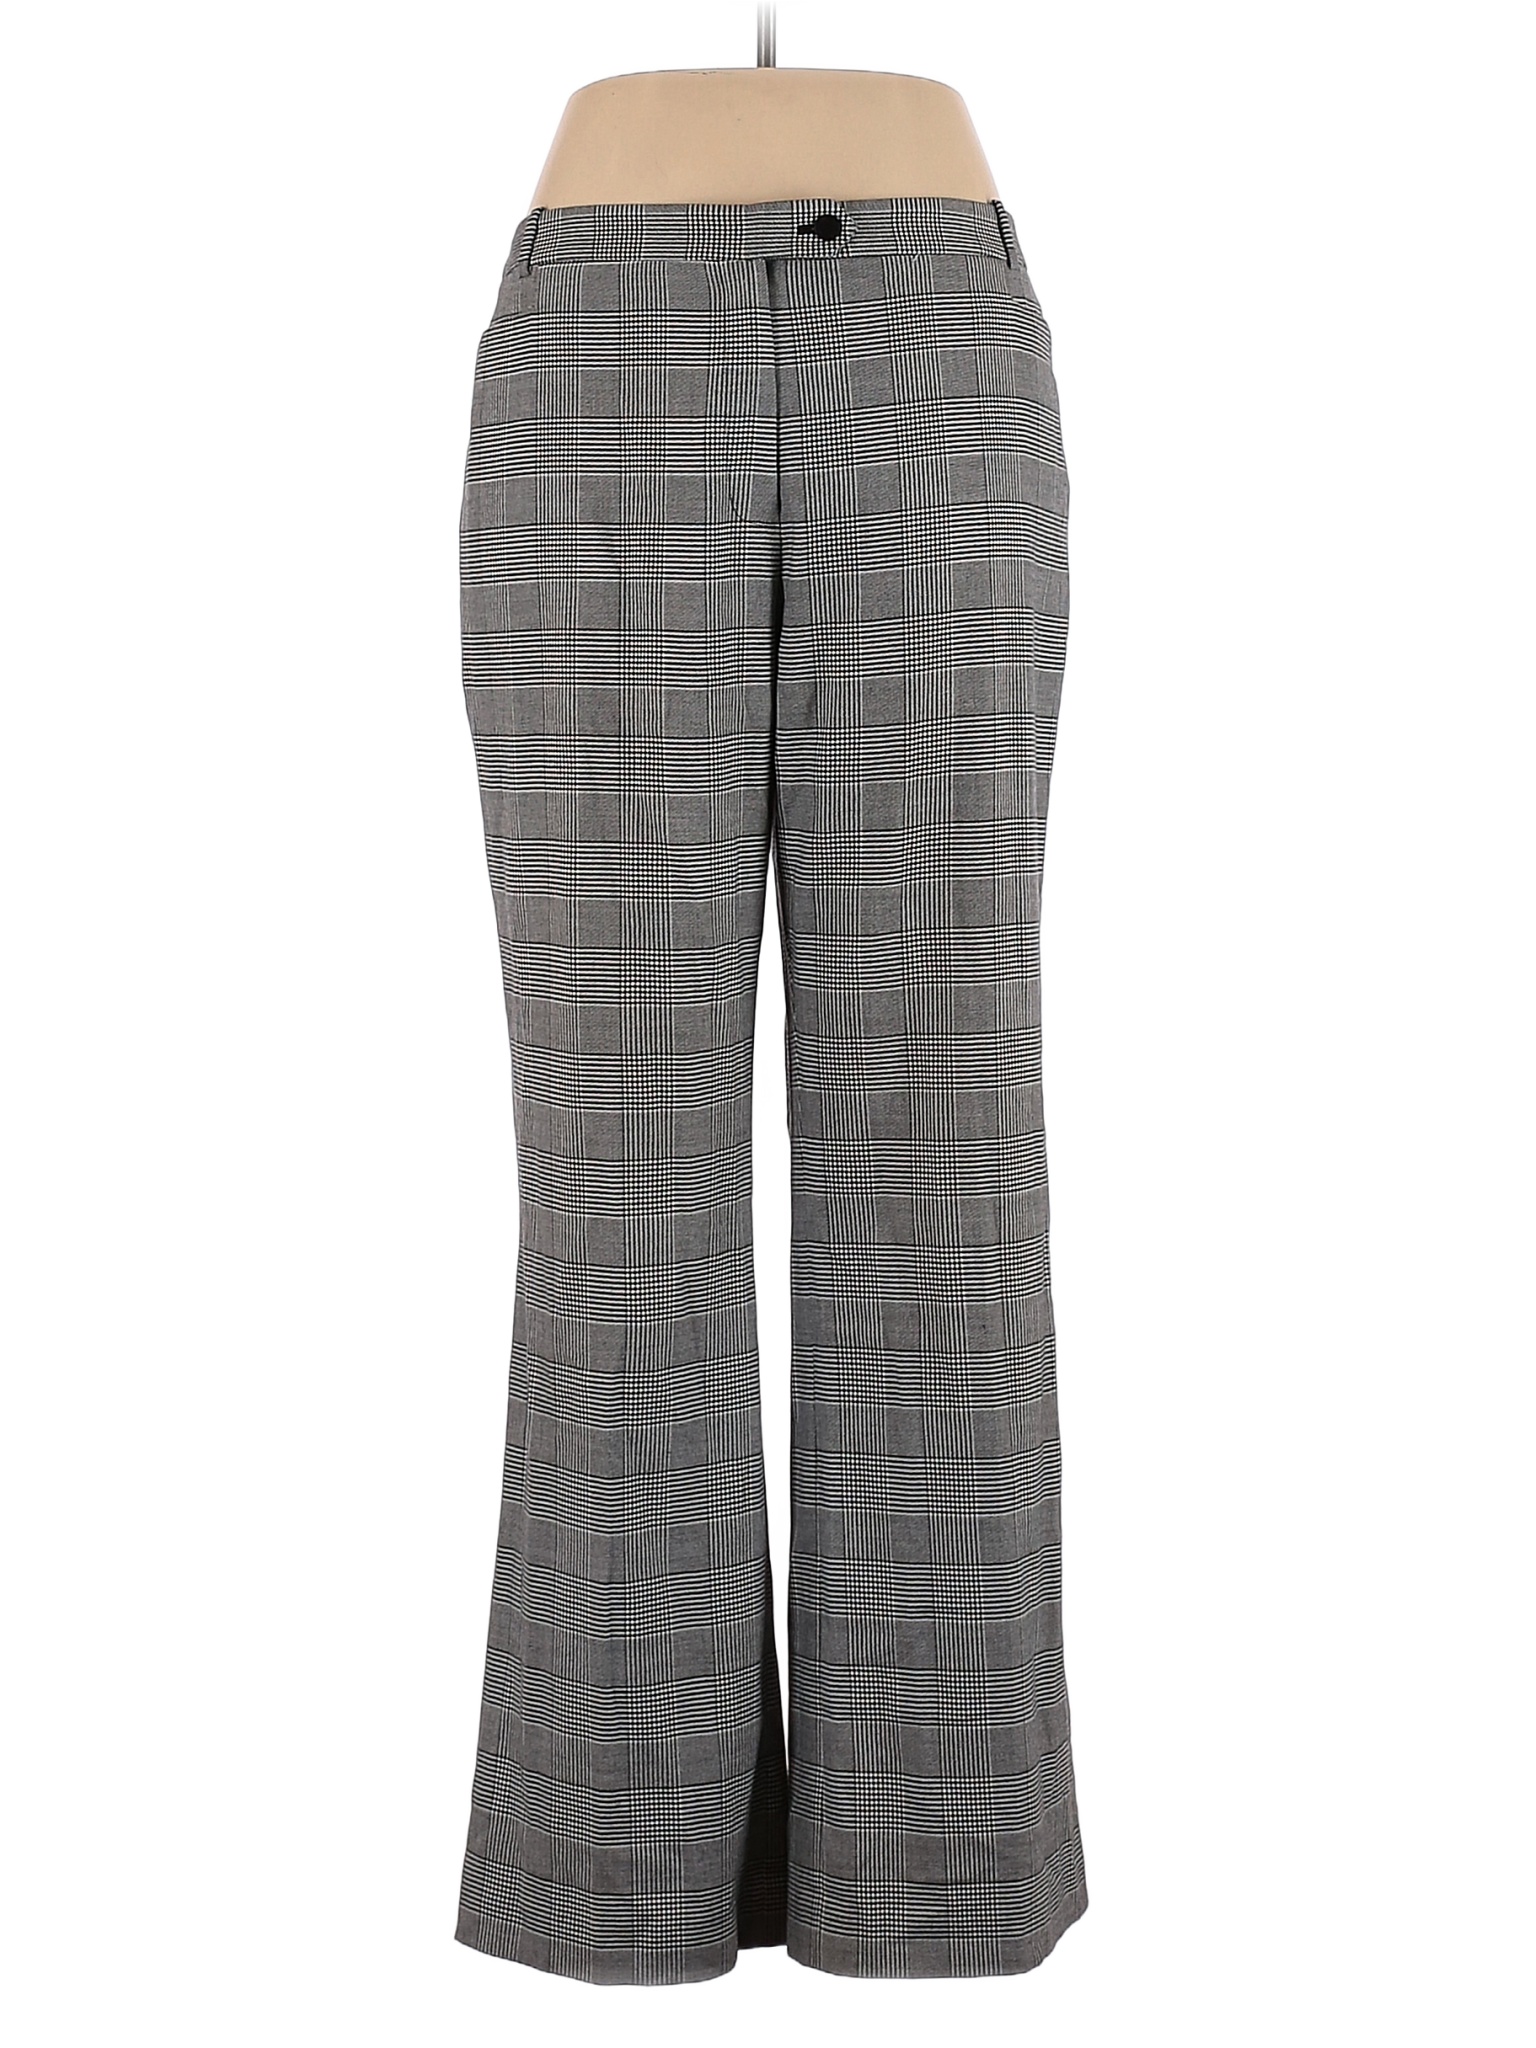 Calvin Klein Plaid Gray Dress Pants Size 16 - 77% off | thredUP